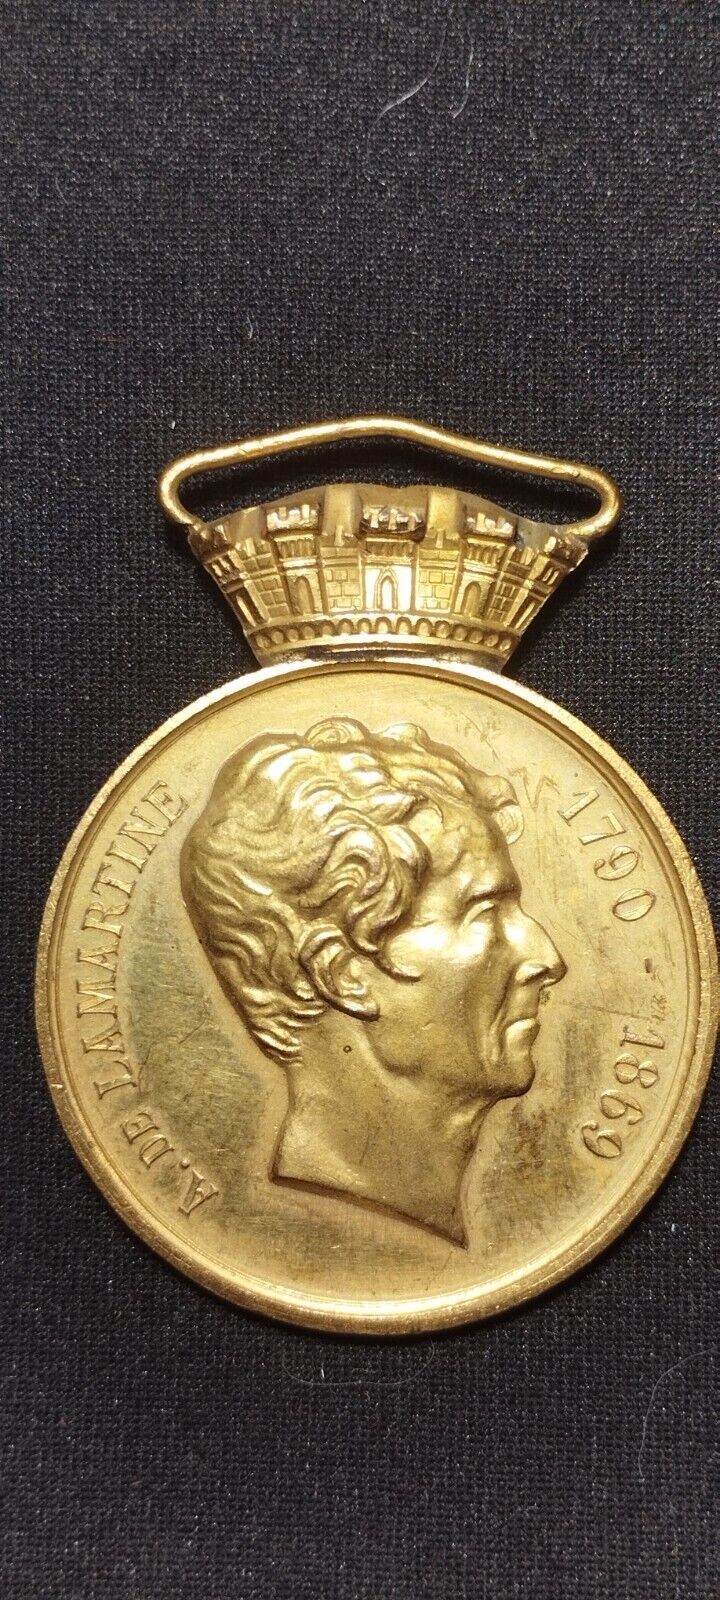 1.4A* (REF1064) LAMARTINE 1790 1869 FINE ARTS French medal